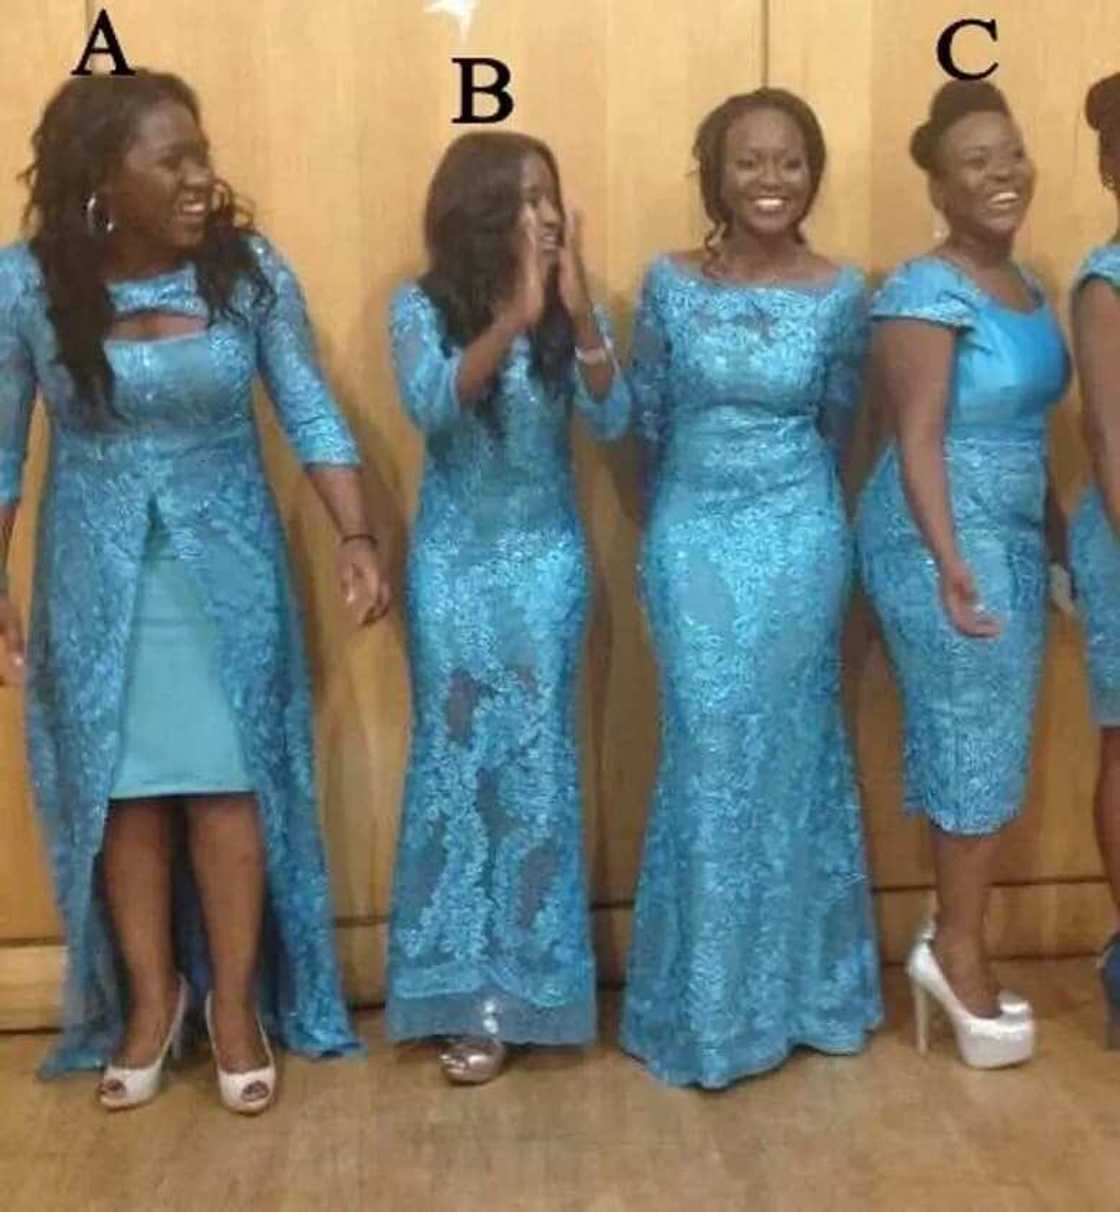 bridesmaid short dress styles
bridesmaid dress styles 2018
african wear for wedding